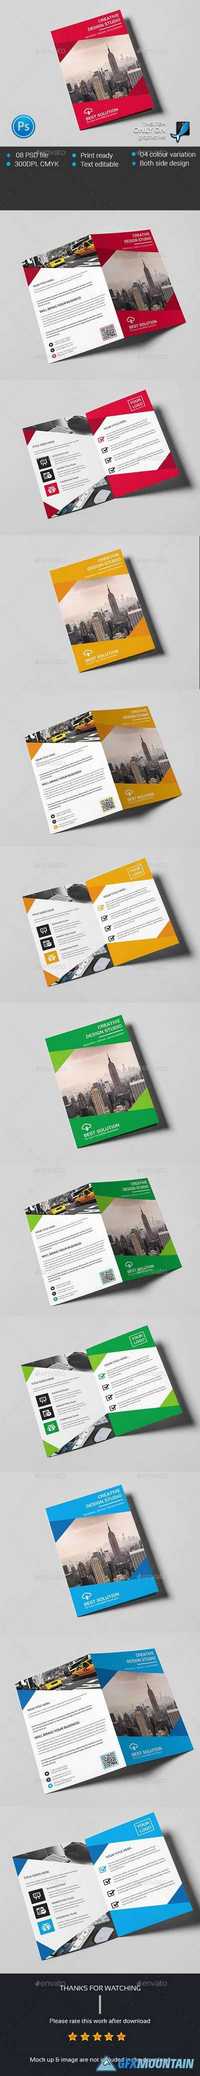 Graphicriver - Corporate Business Bi-fold Brochure 13948978